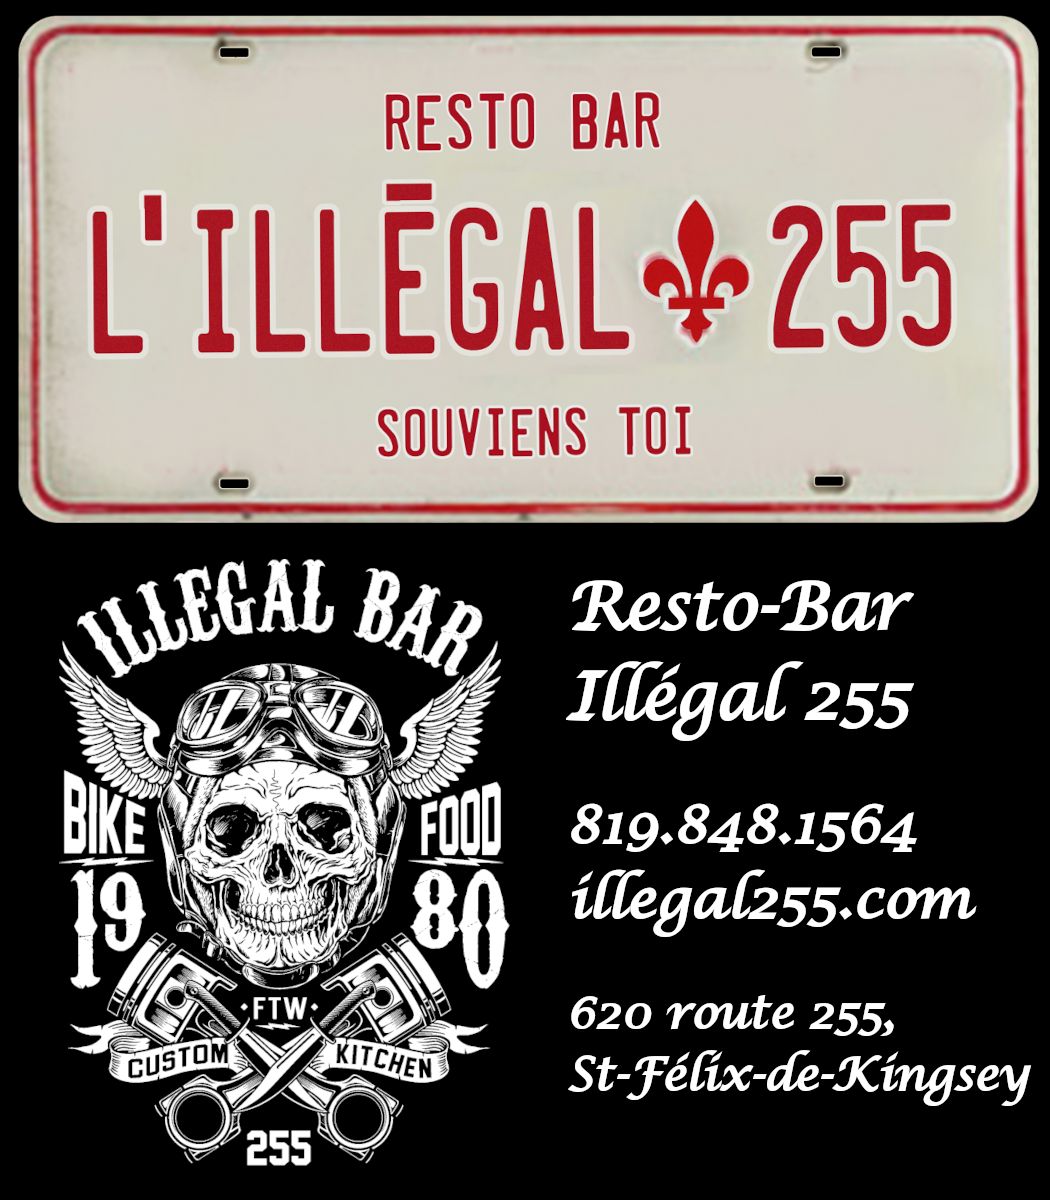 Resto-Bar Illegal 255